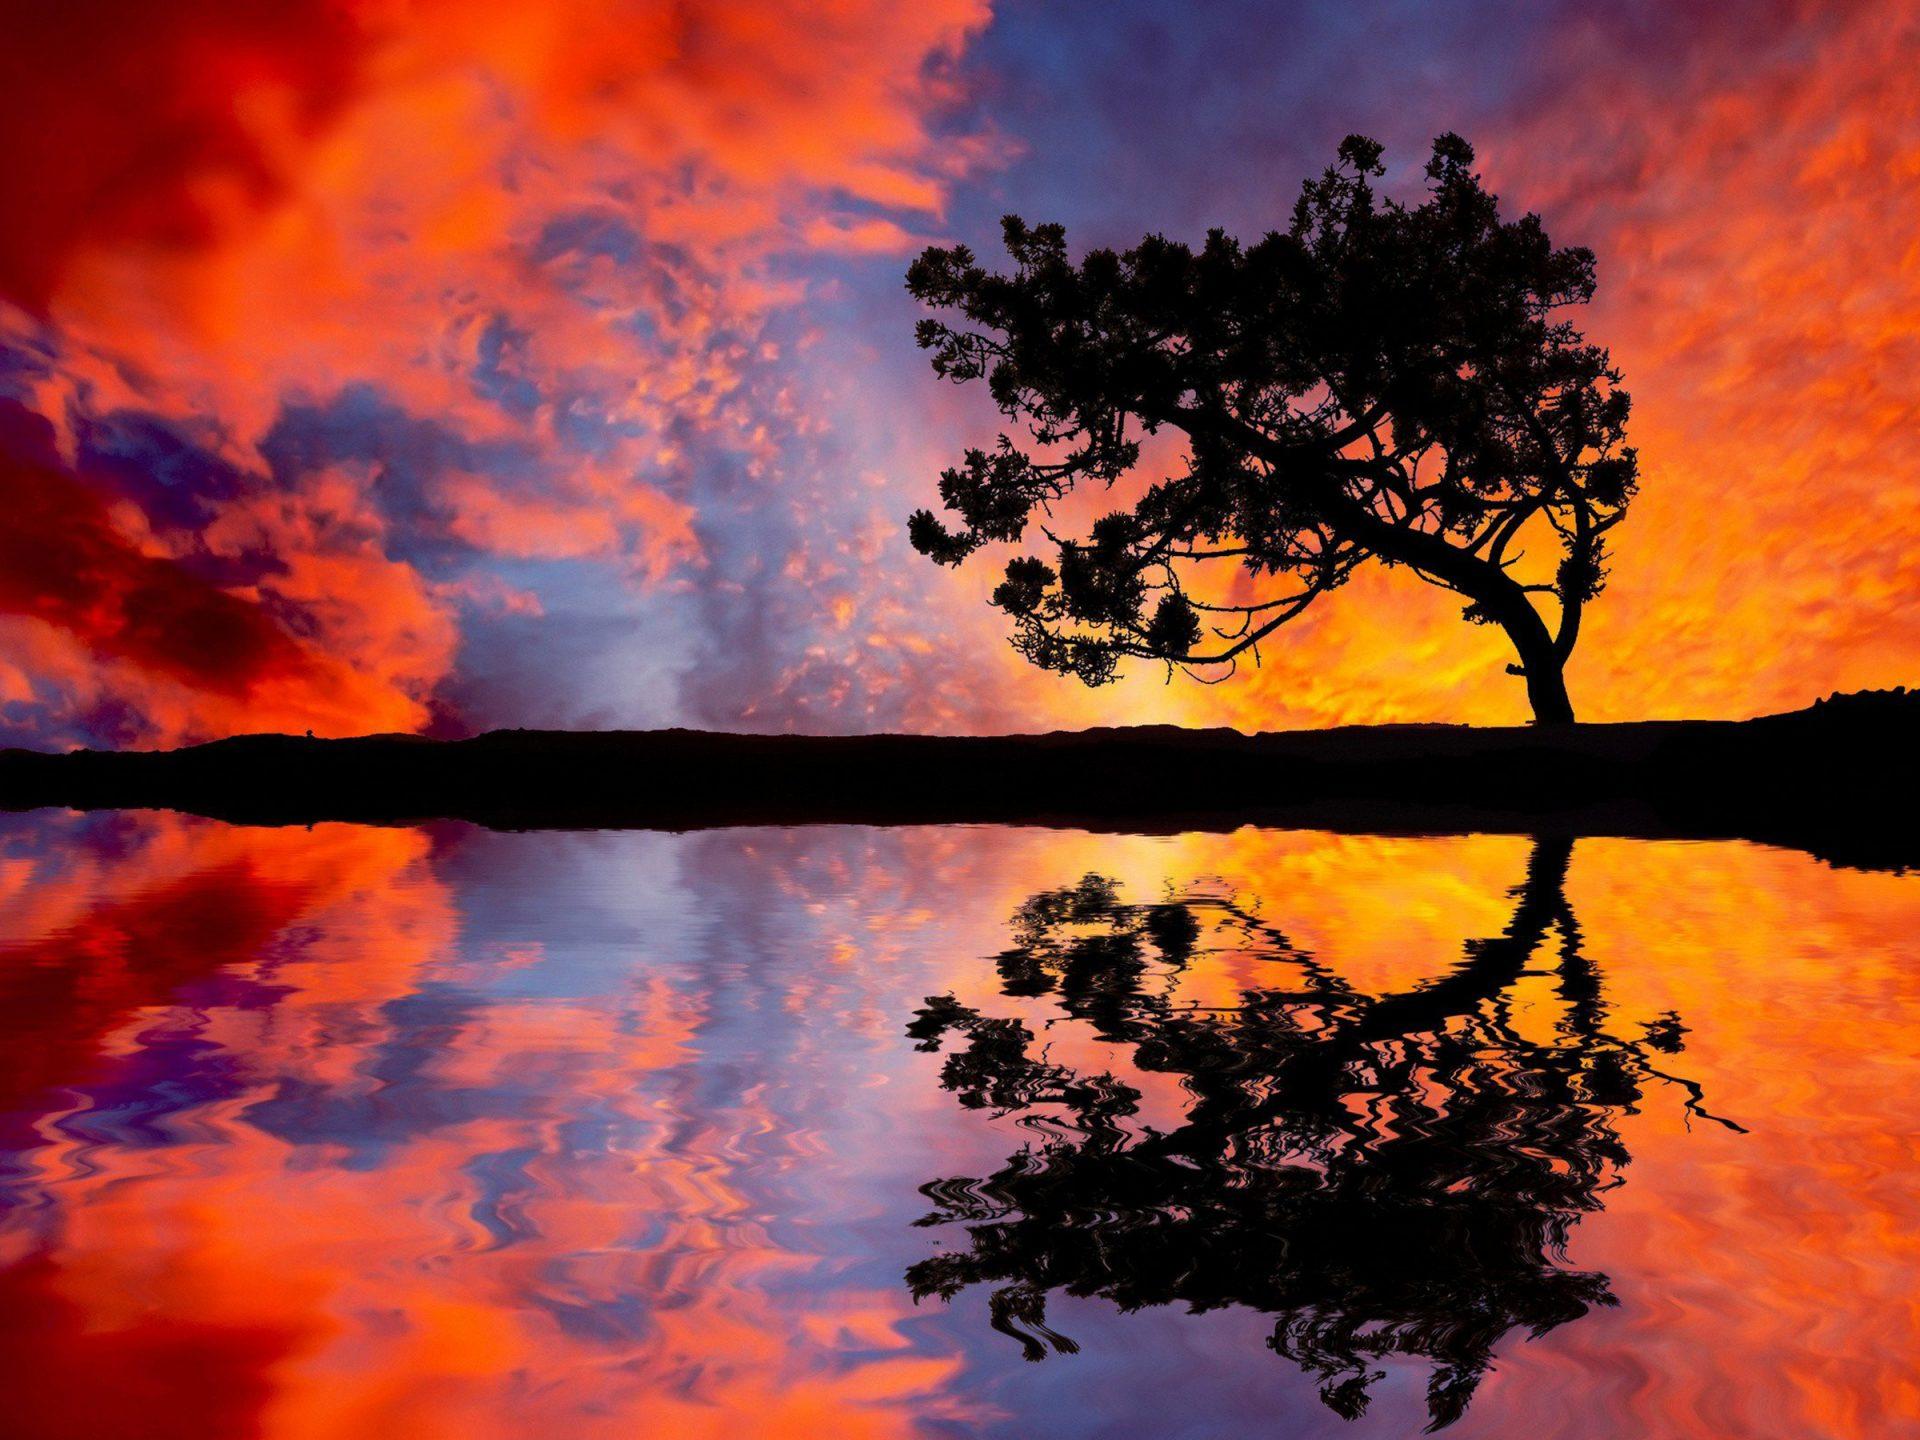 Sunset Tree Reflection Desktop HD Wallpaper For Mobile Phones